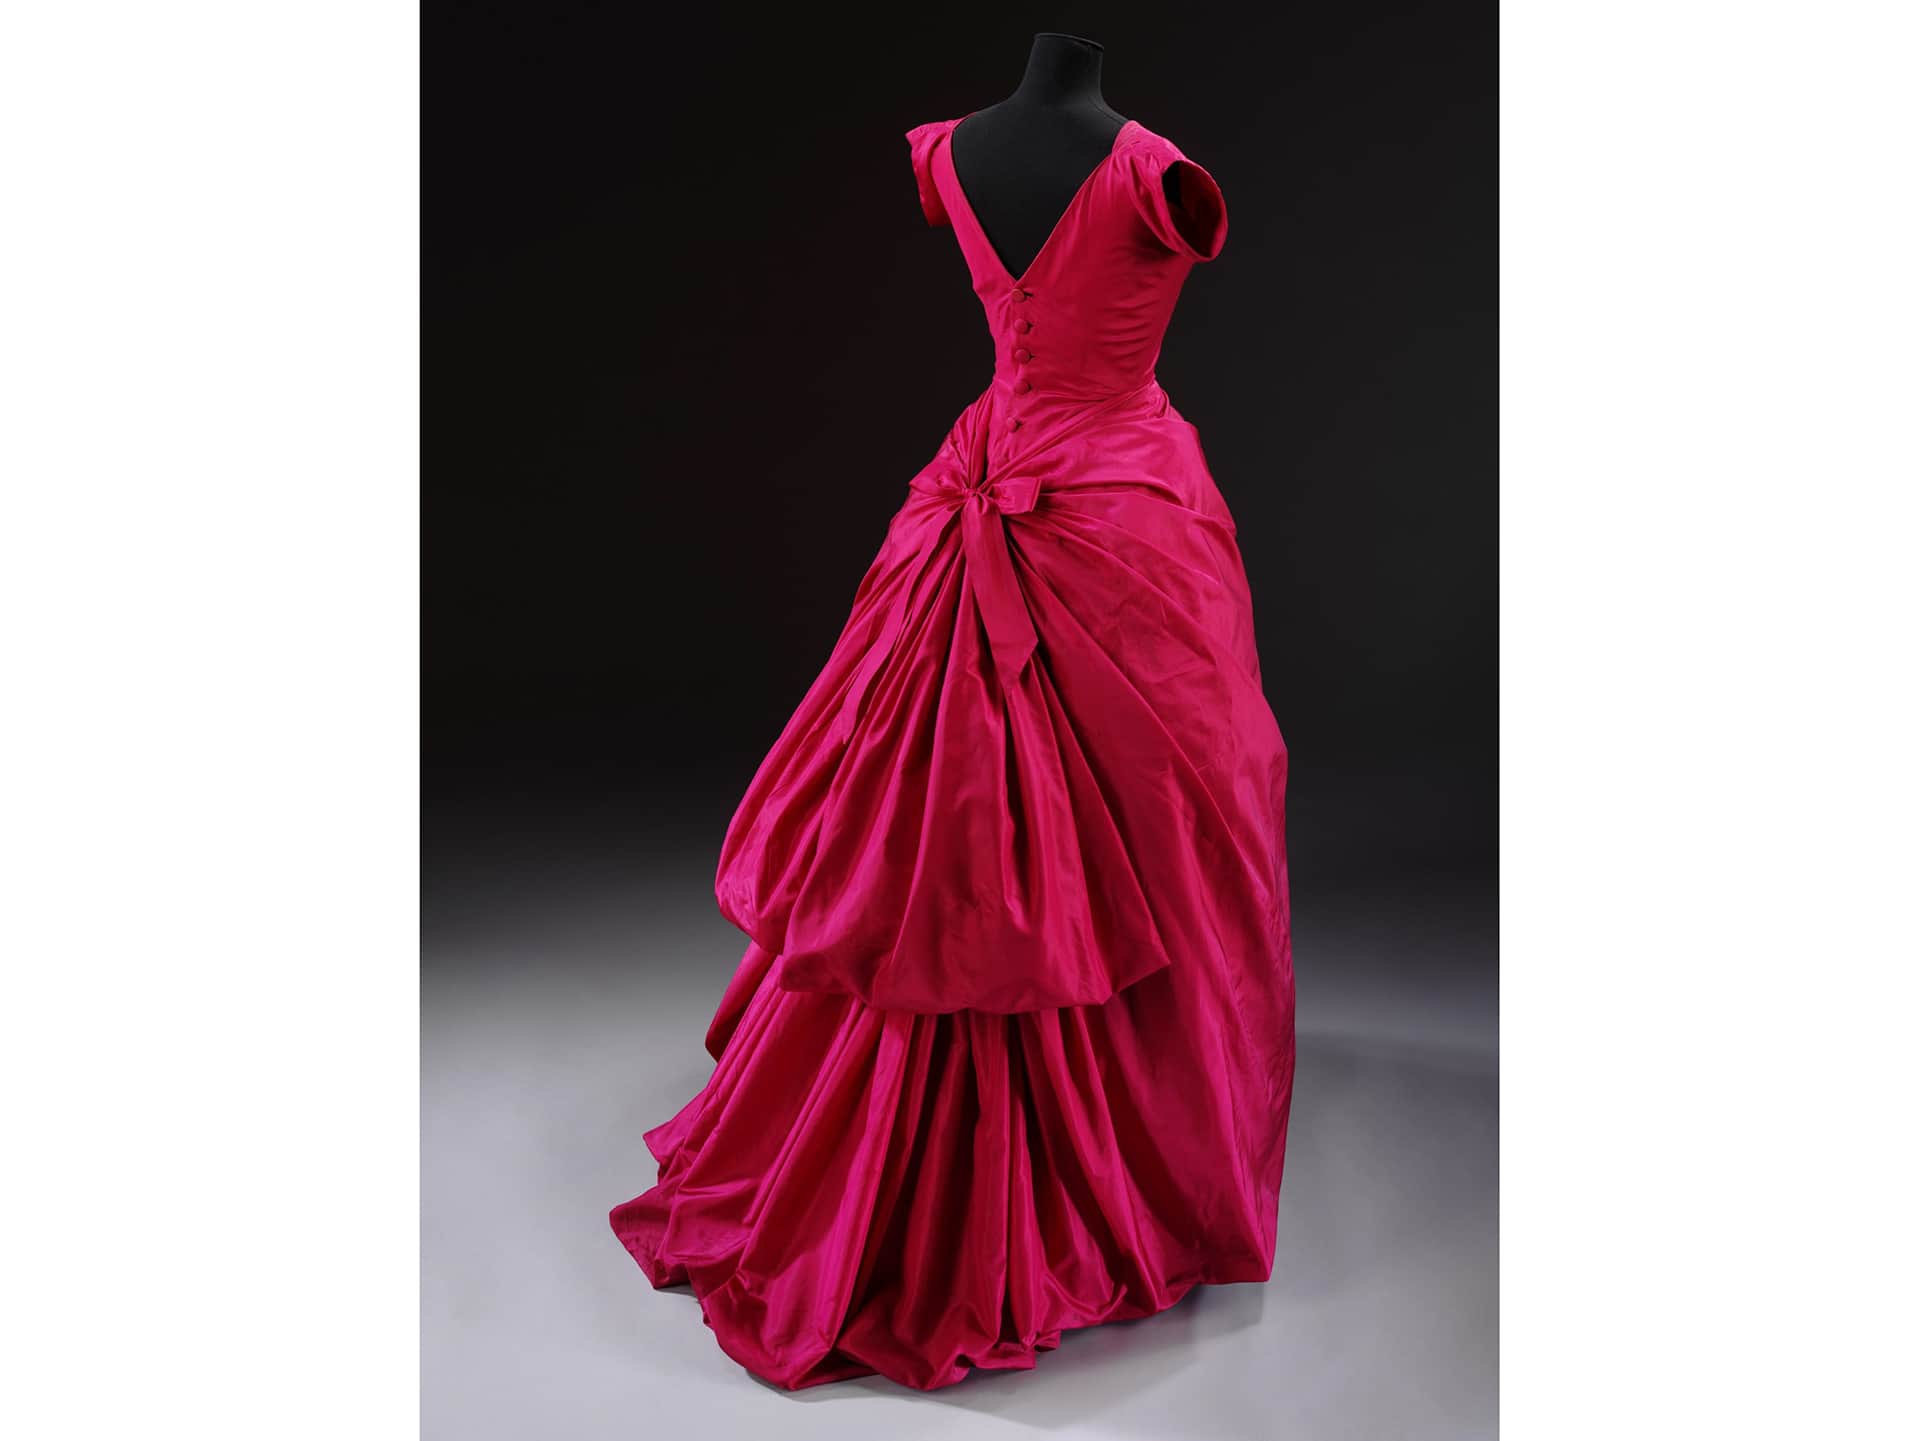 Silk evening gown by Cristóbal Balenciaga, Paris, c 1955